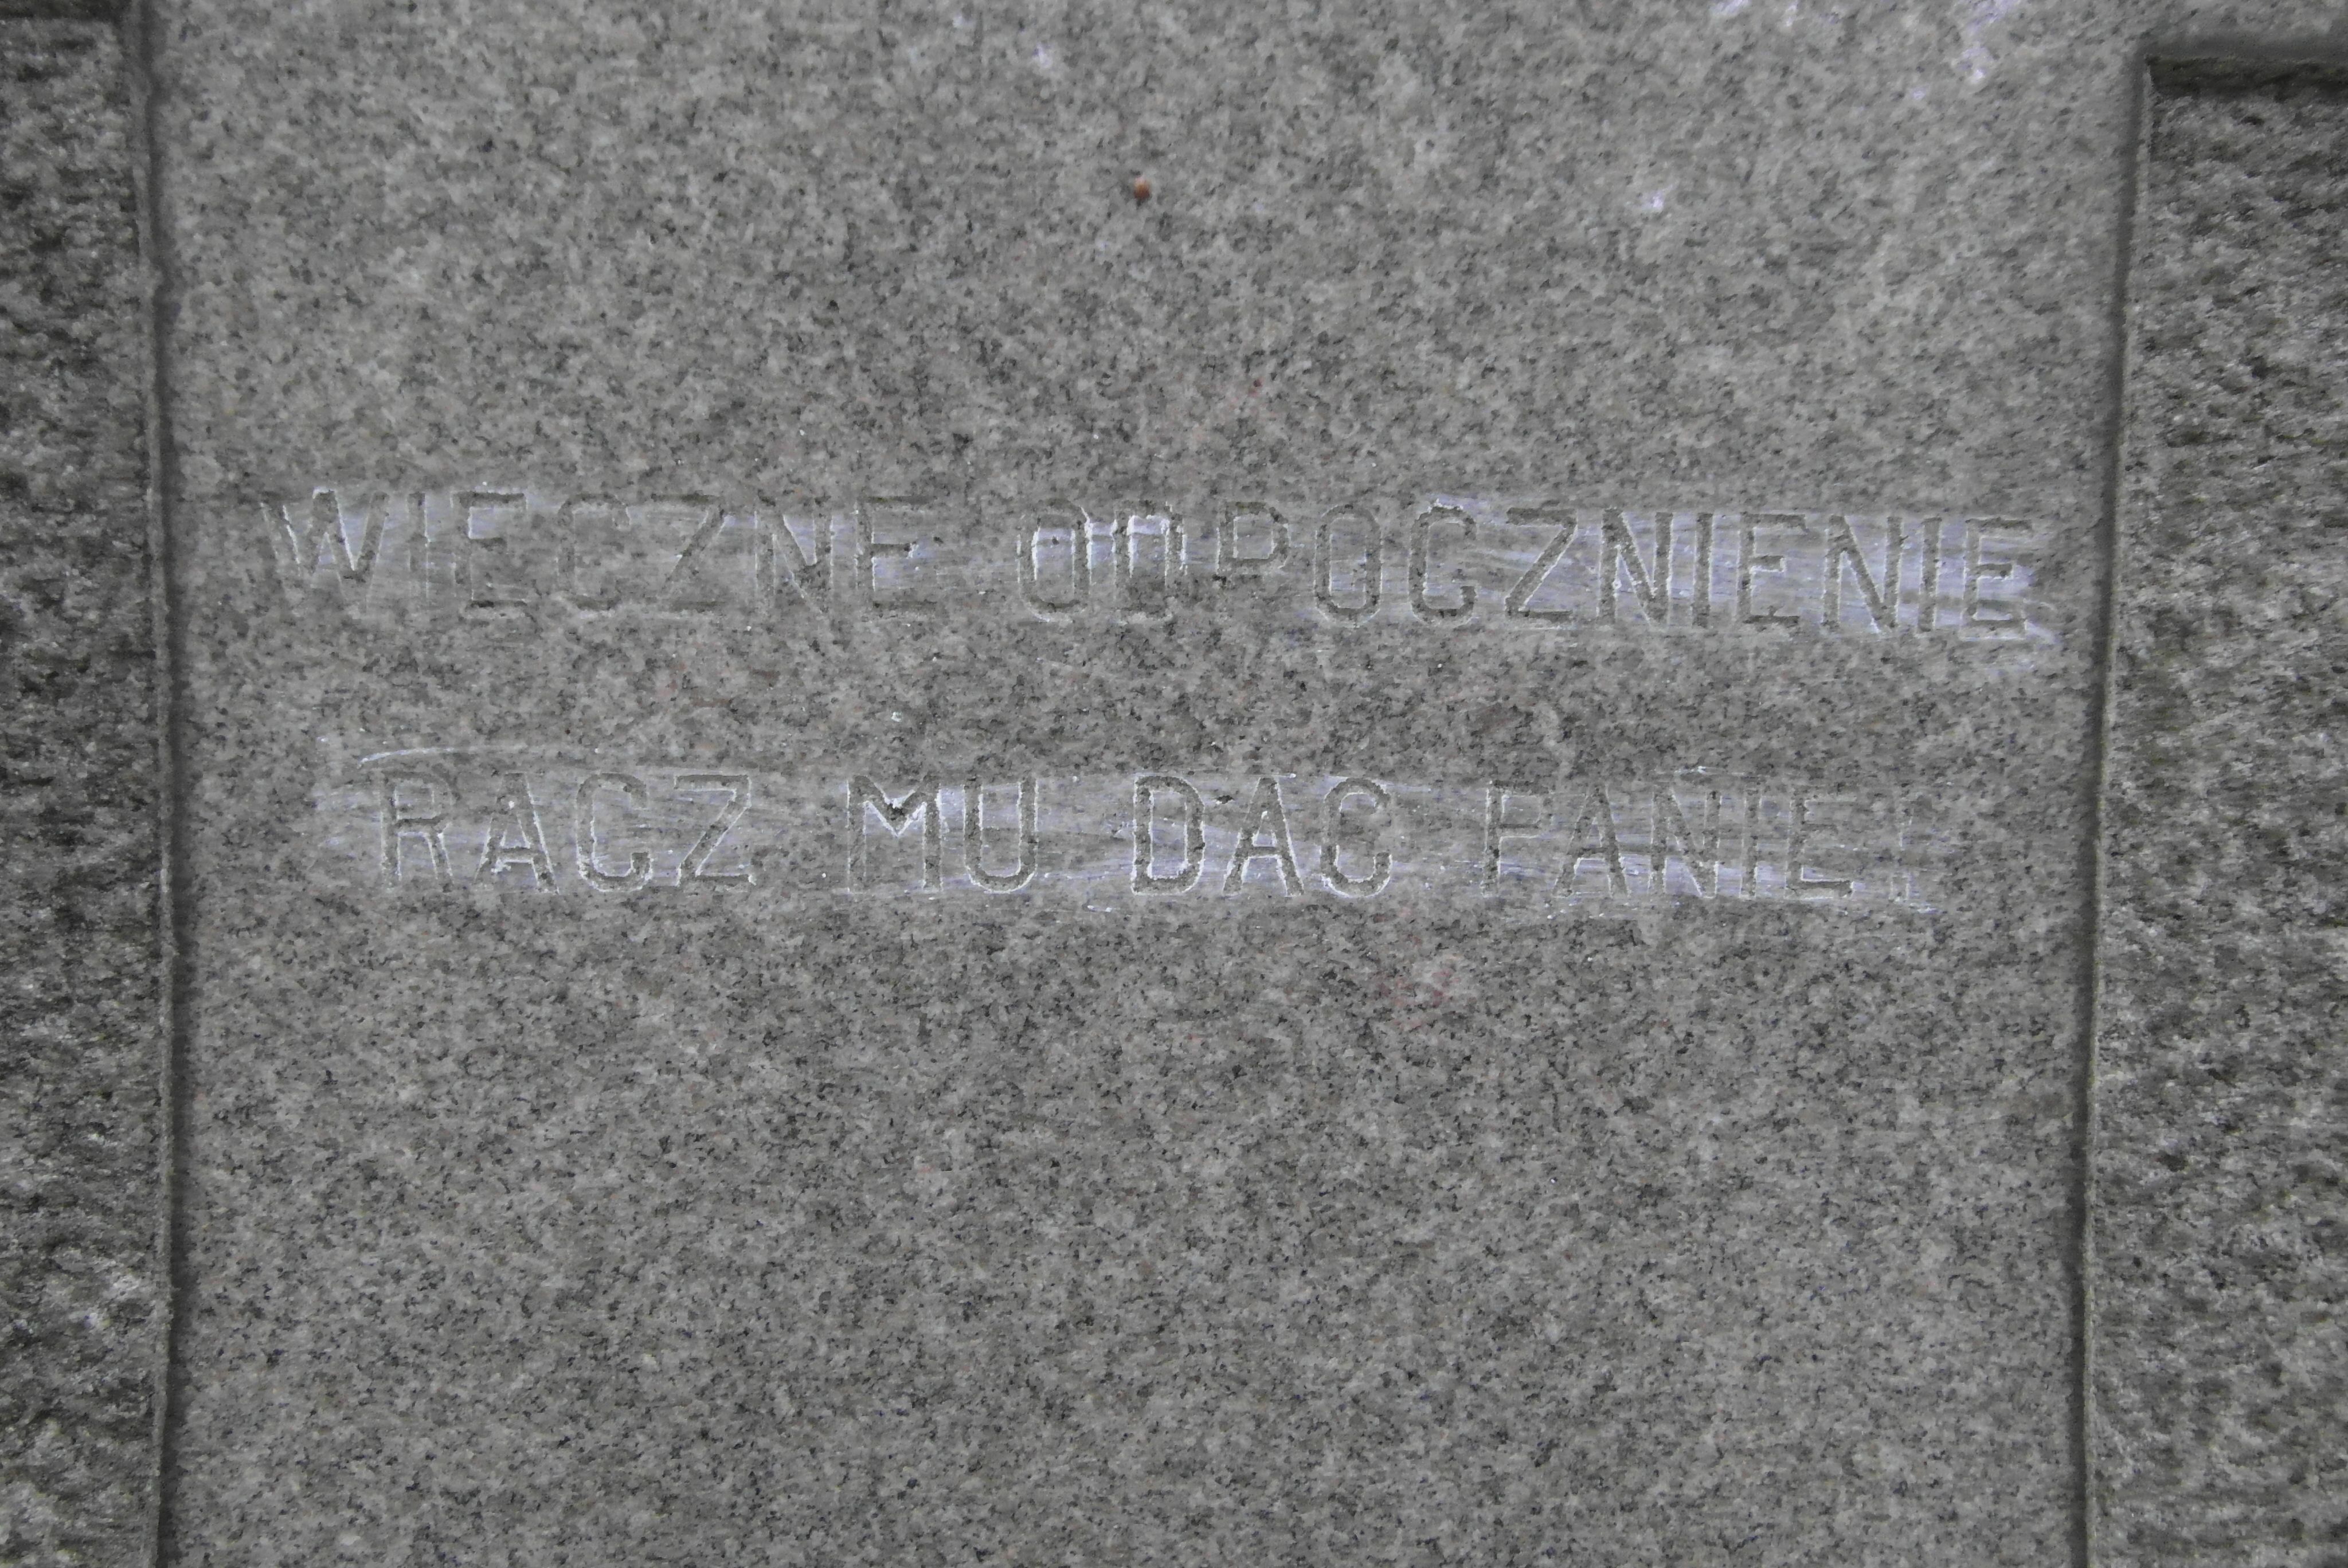 Inscription from the tombstone of Boleslaw Kibortt, St Michael's cemetery in Riga, as of 2021.